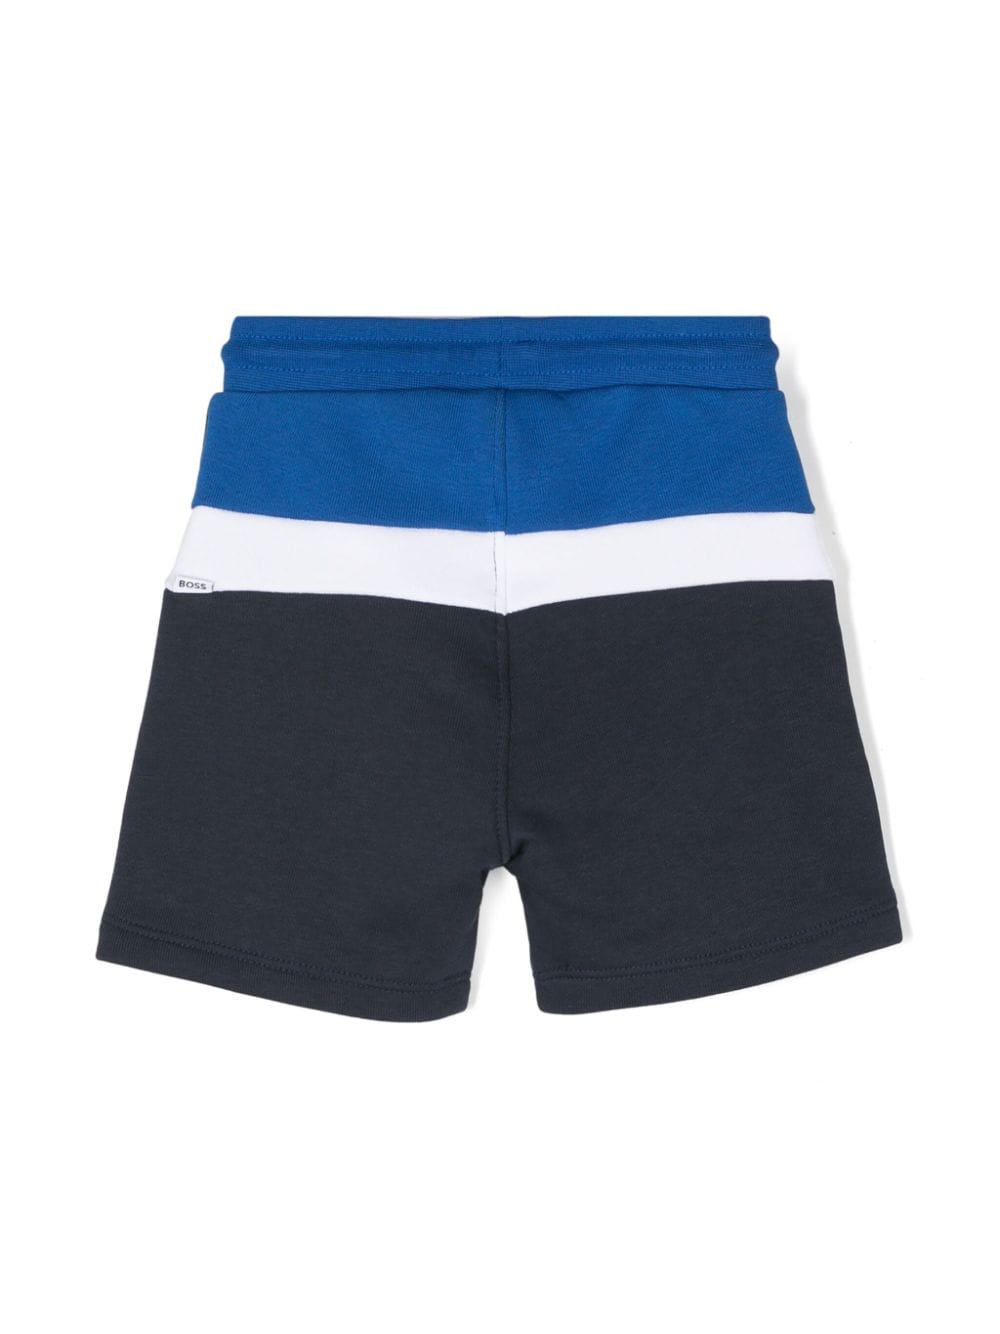 Blue Bermuda shorts for newborns with logo